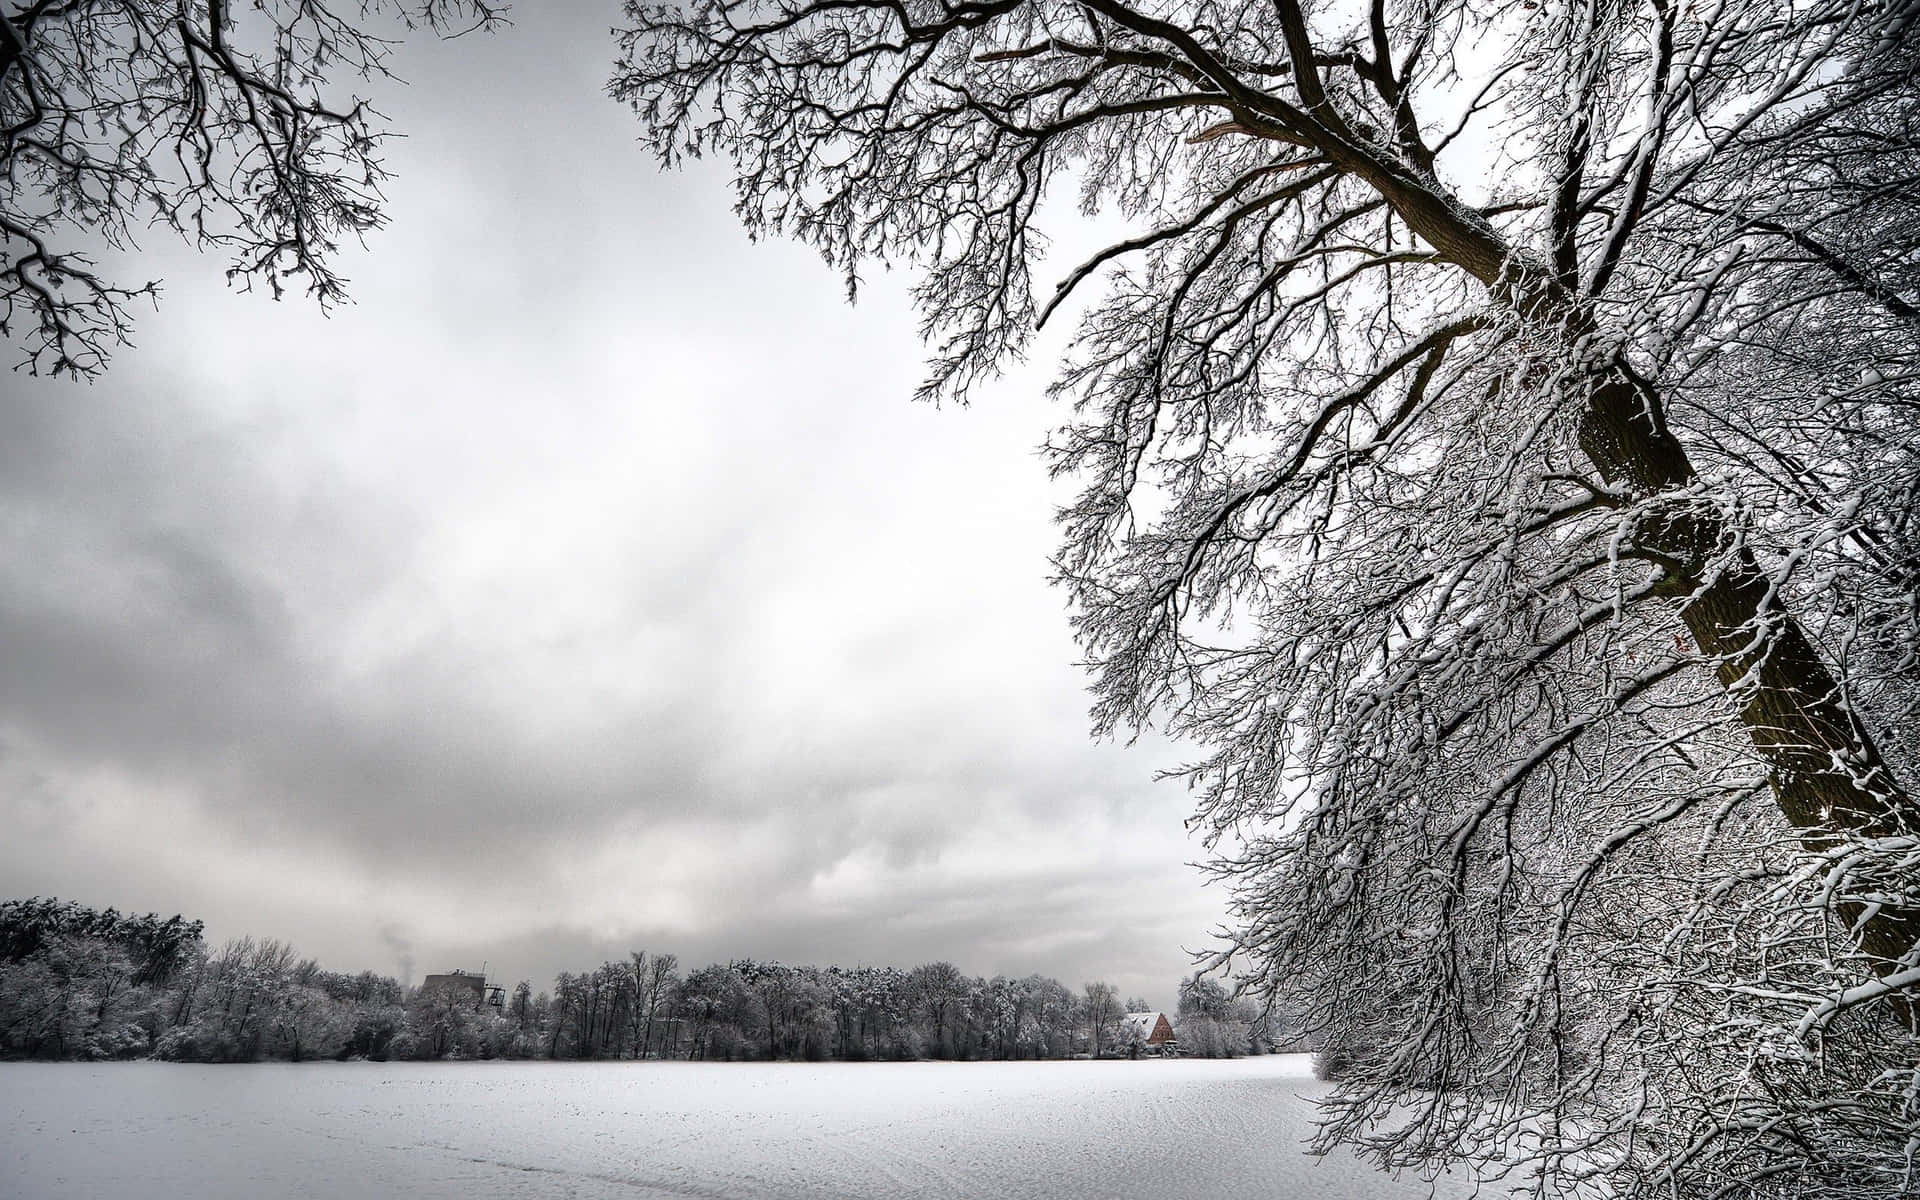 Enjoy a tranquil winter landscape with this winter scenery desktop wallpaper Wallpaper